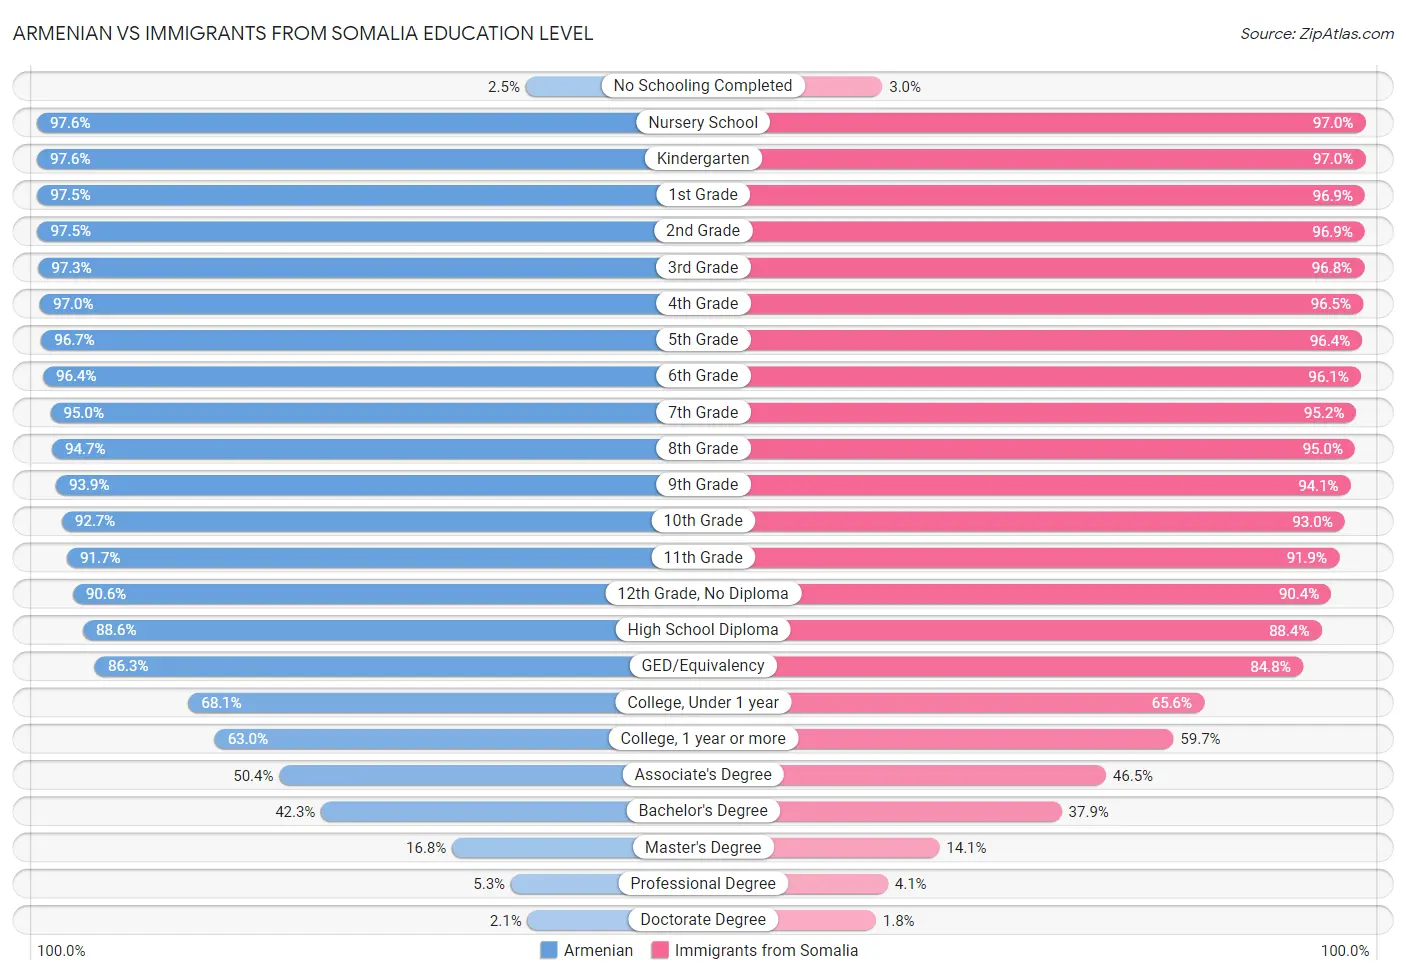 Armenian vs Immigrants from Somalia Education Level